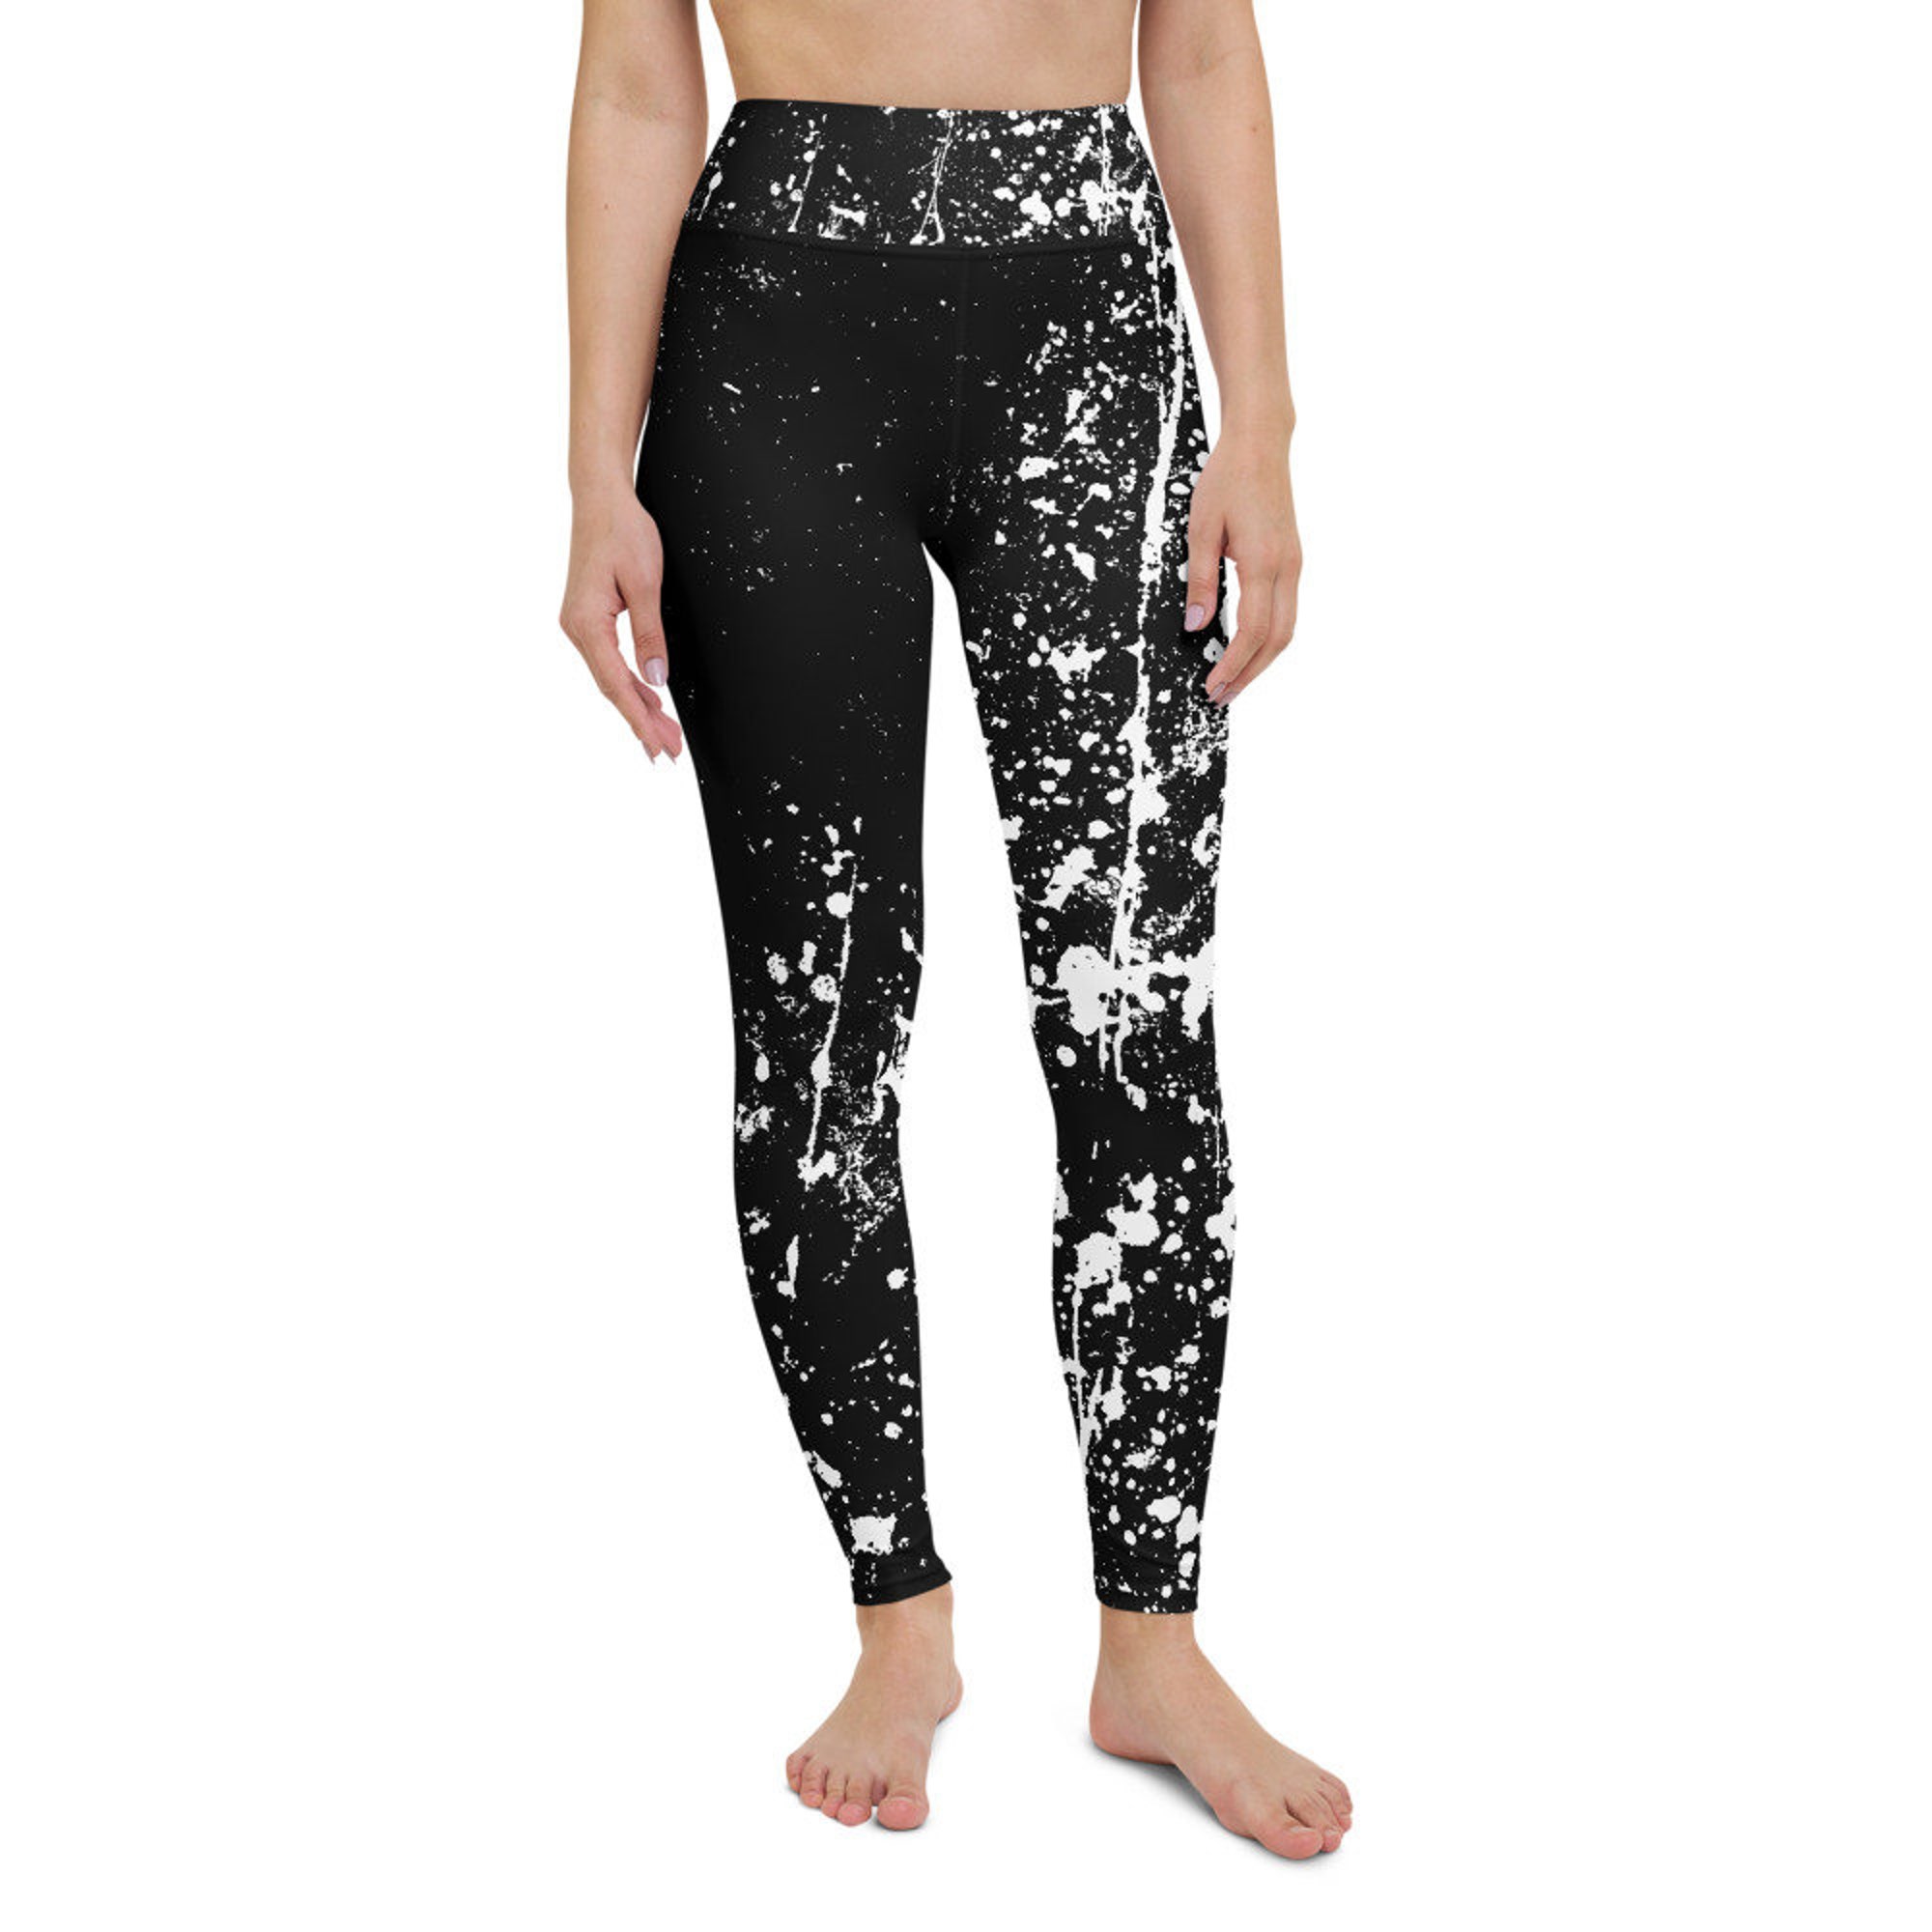 Yoga Leggings - Yoga Pants Black White